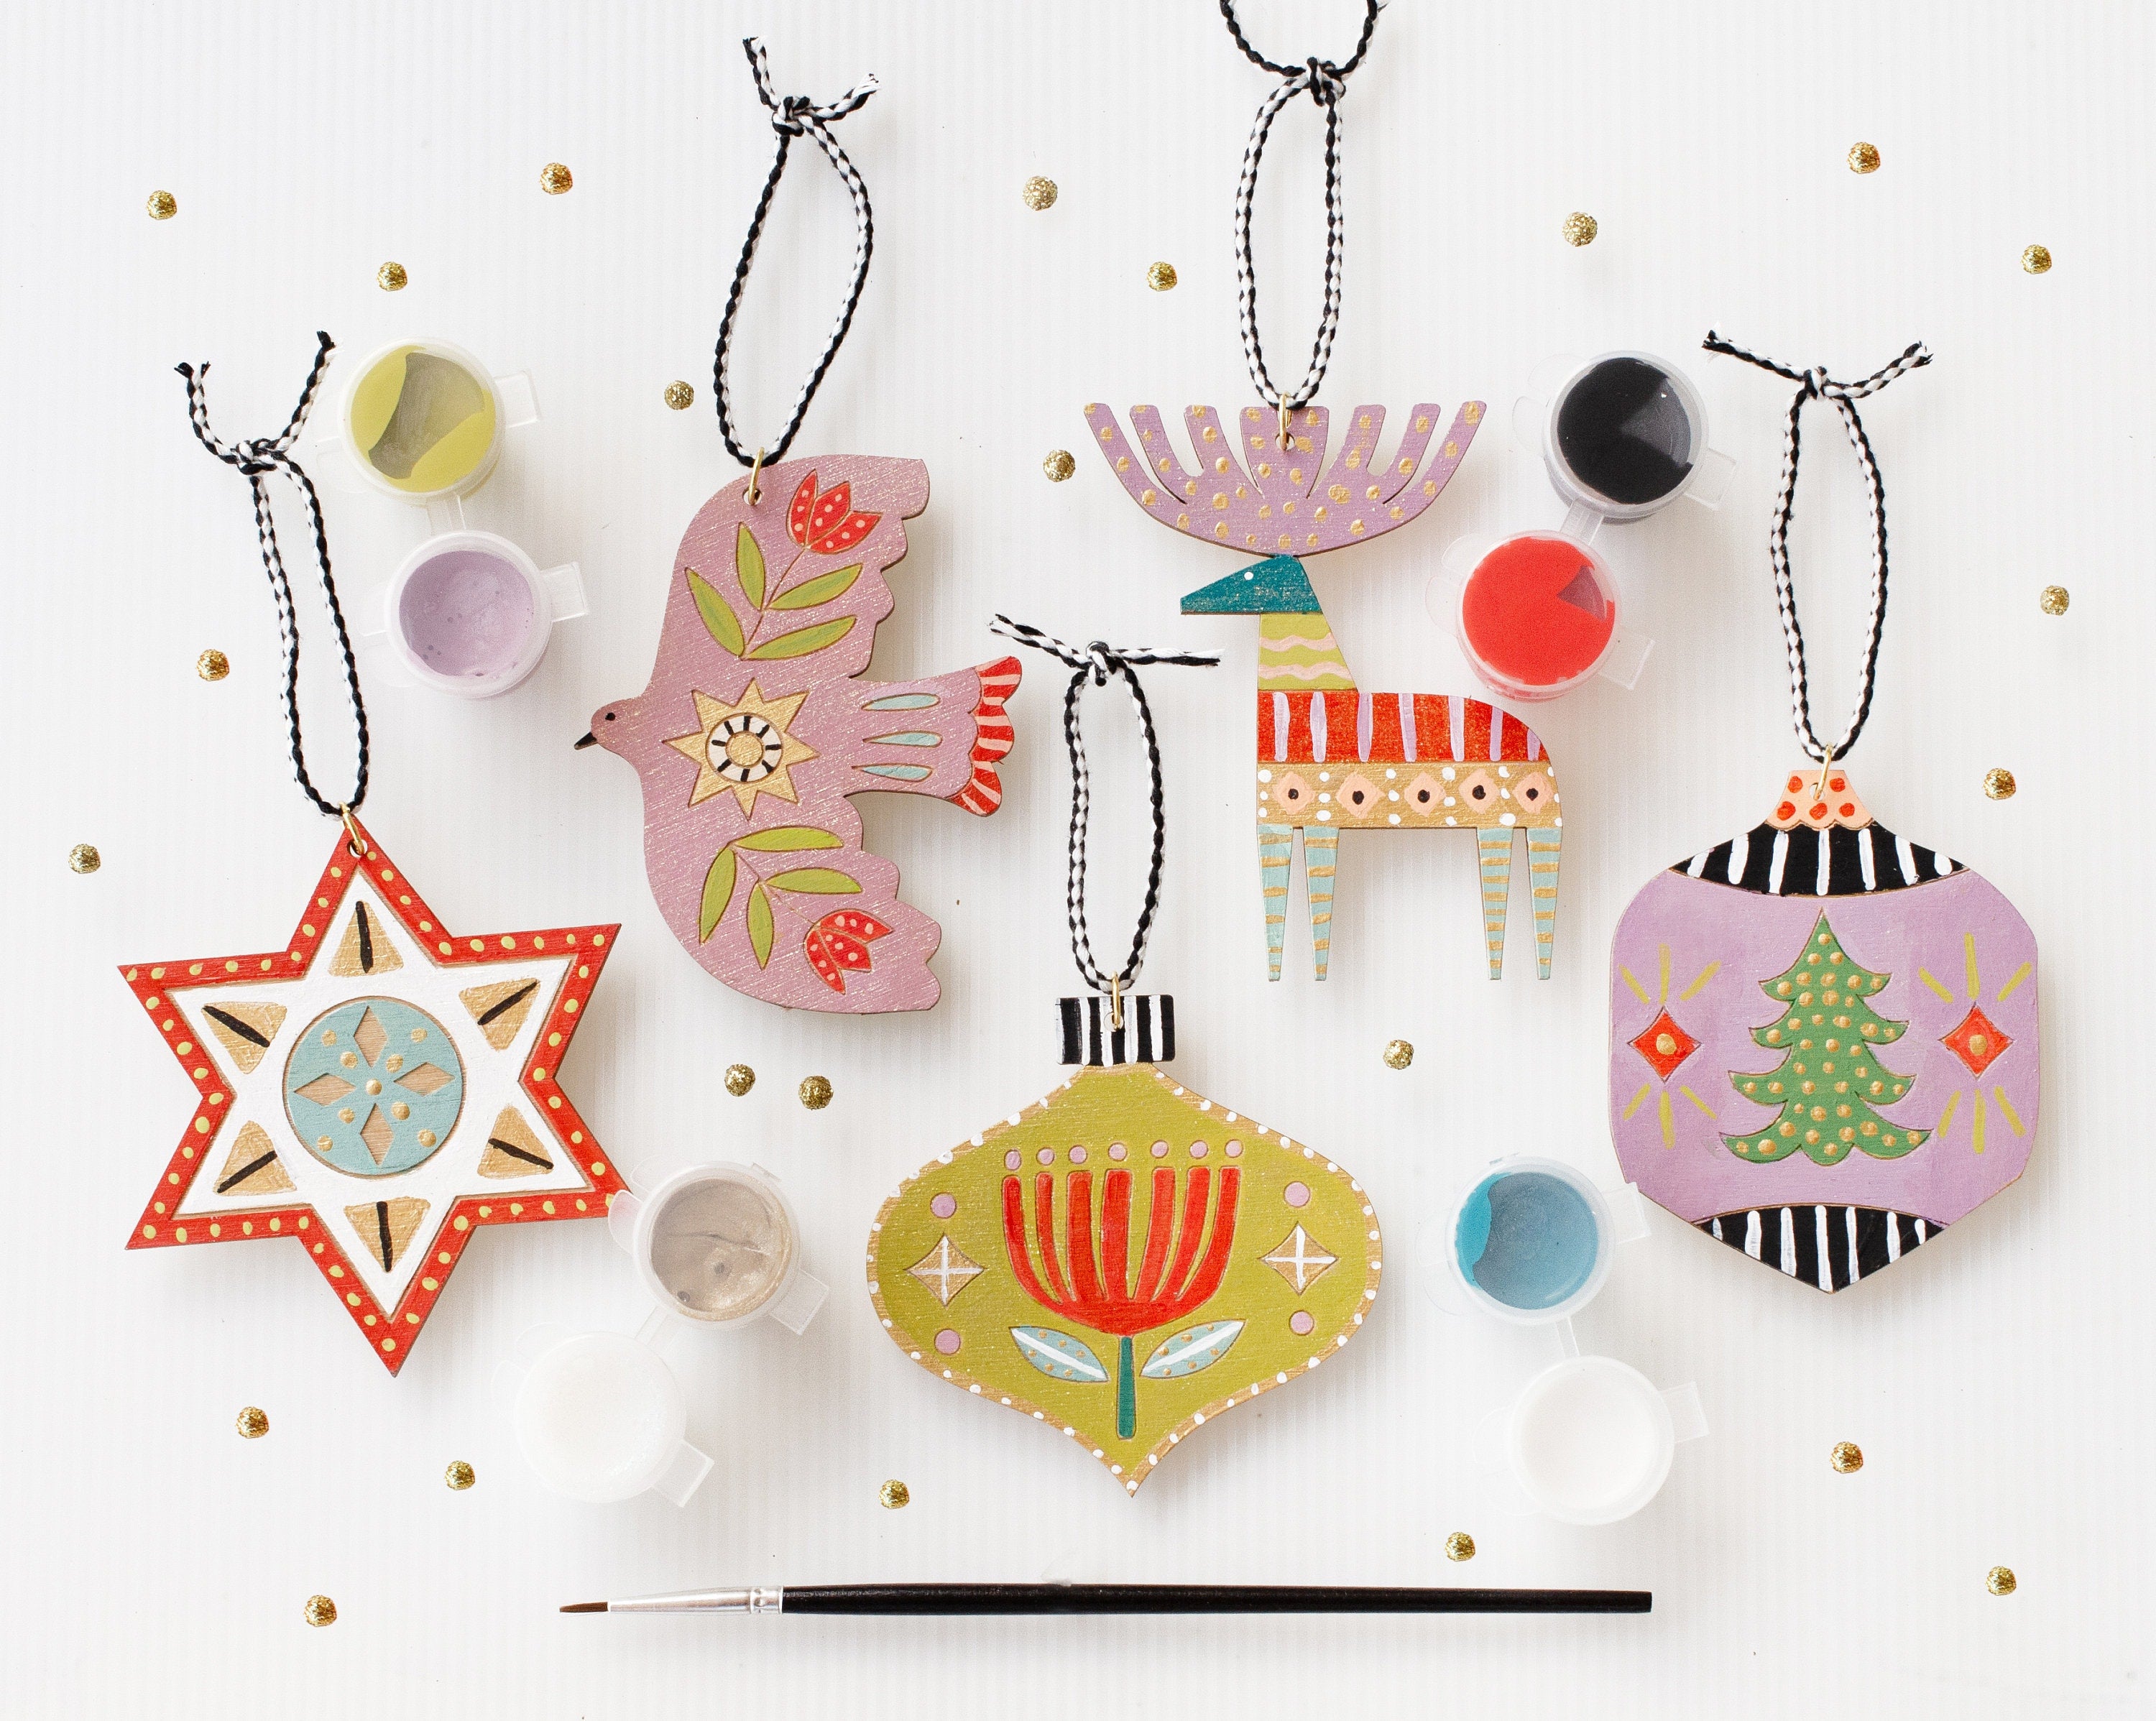 Christmas Felt Ornaments - Kids Holiday Arts and Crafts Box